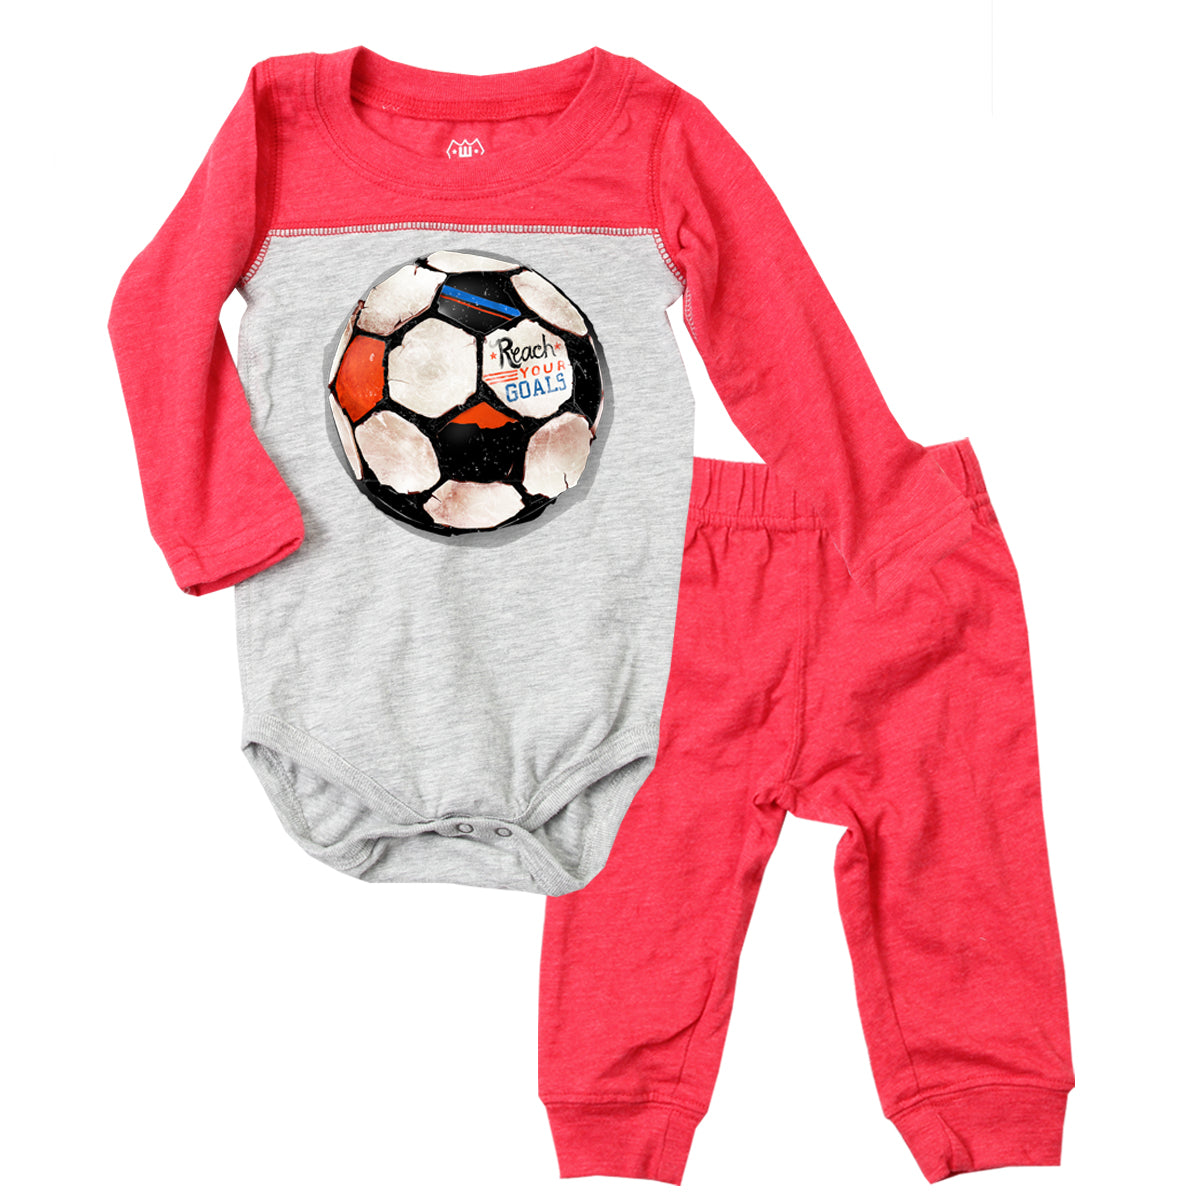 Wes & Willy Infant's Soccer Ball Bodysuit Set